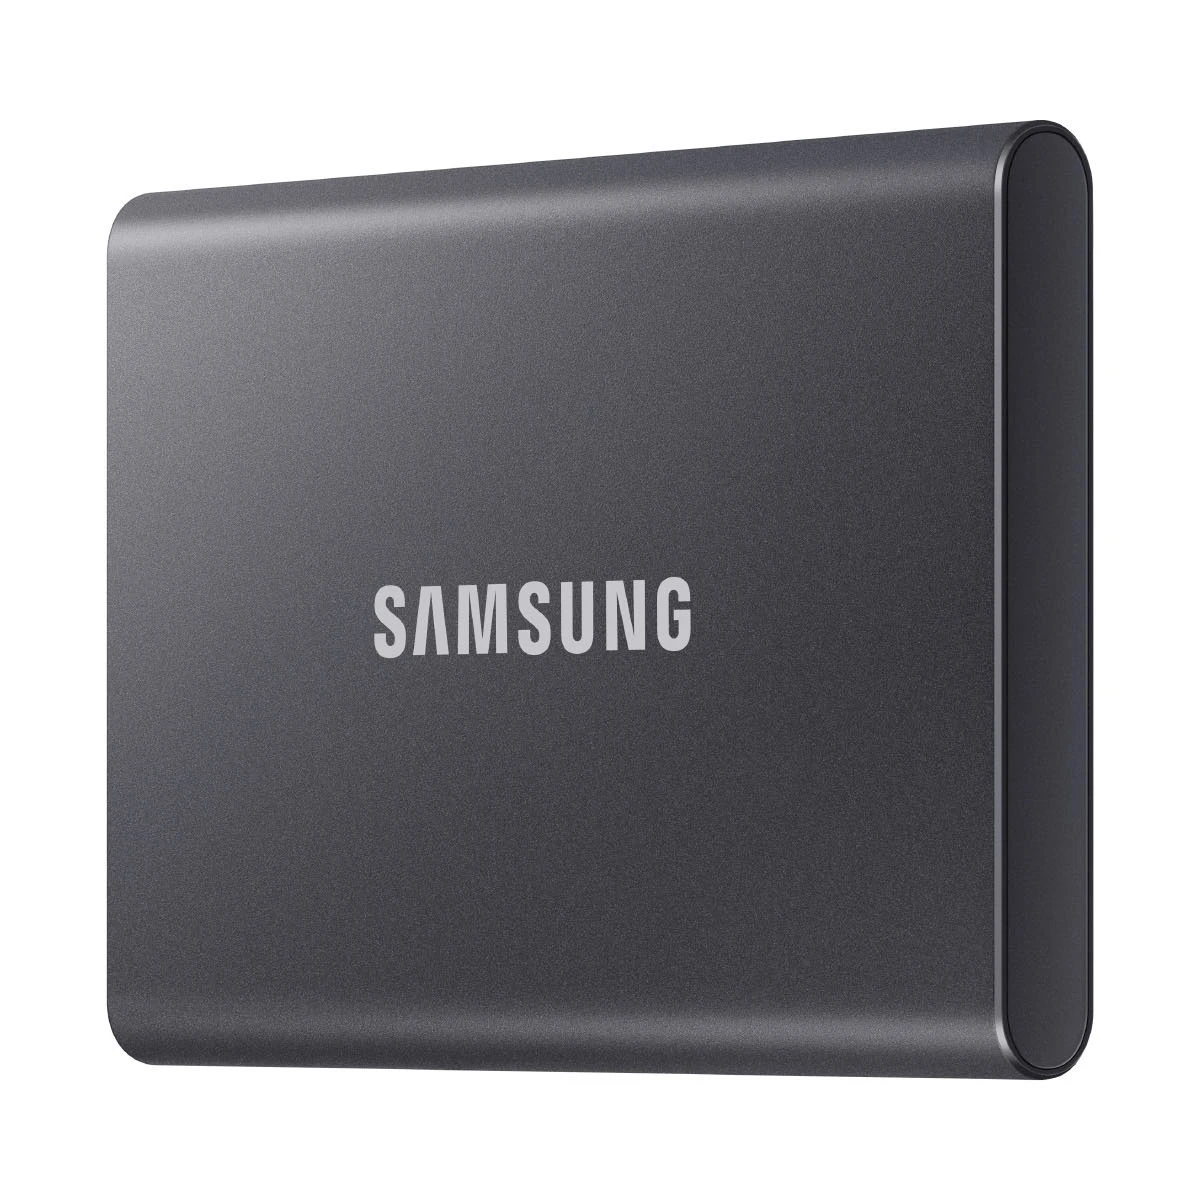 Original SAMSUNG External SSD T7 500GB 1TB USB 3.1 External Hard Drive 2TB Solid State Drives for Desktop Laptop PC